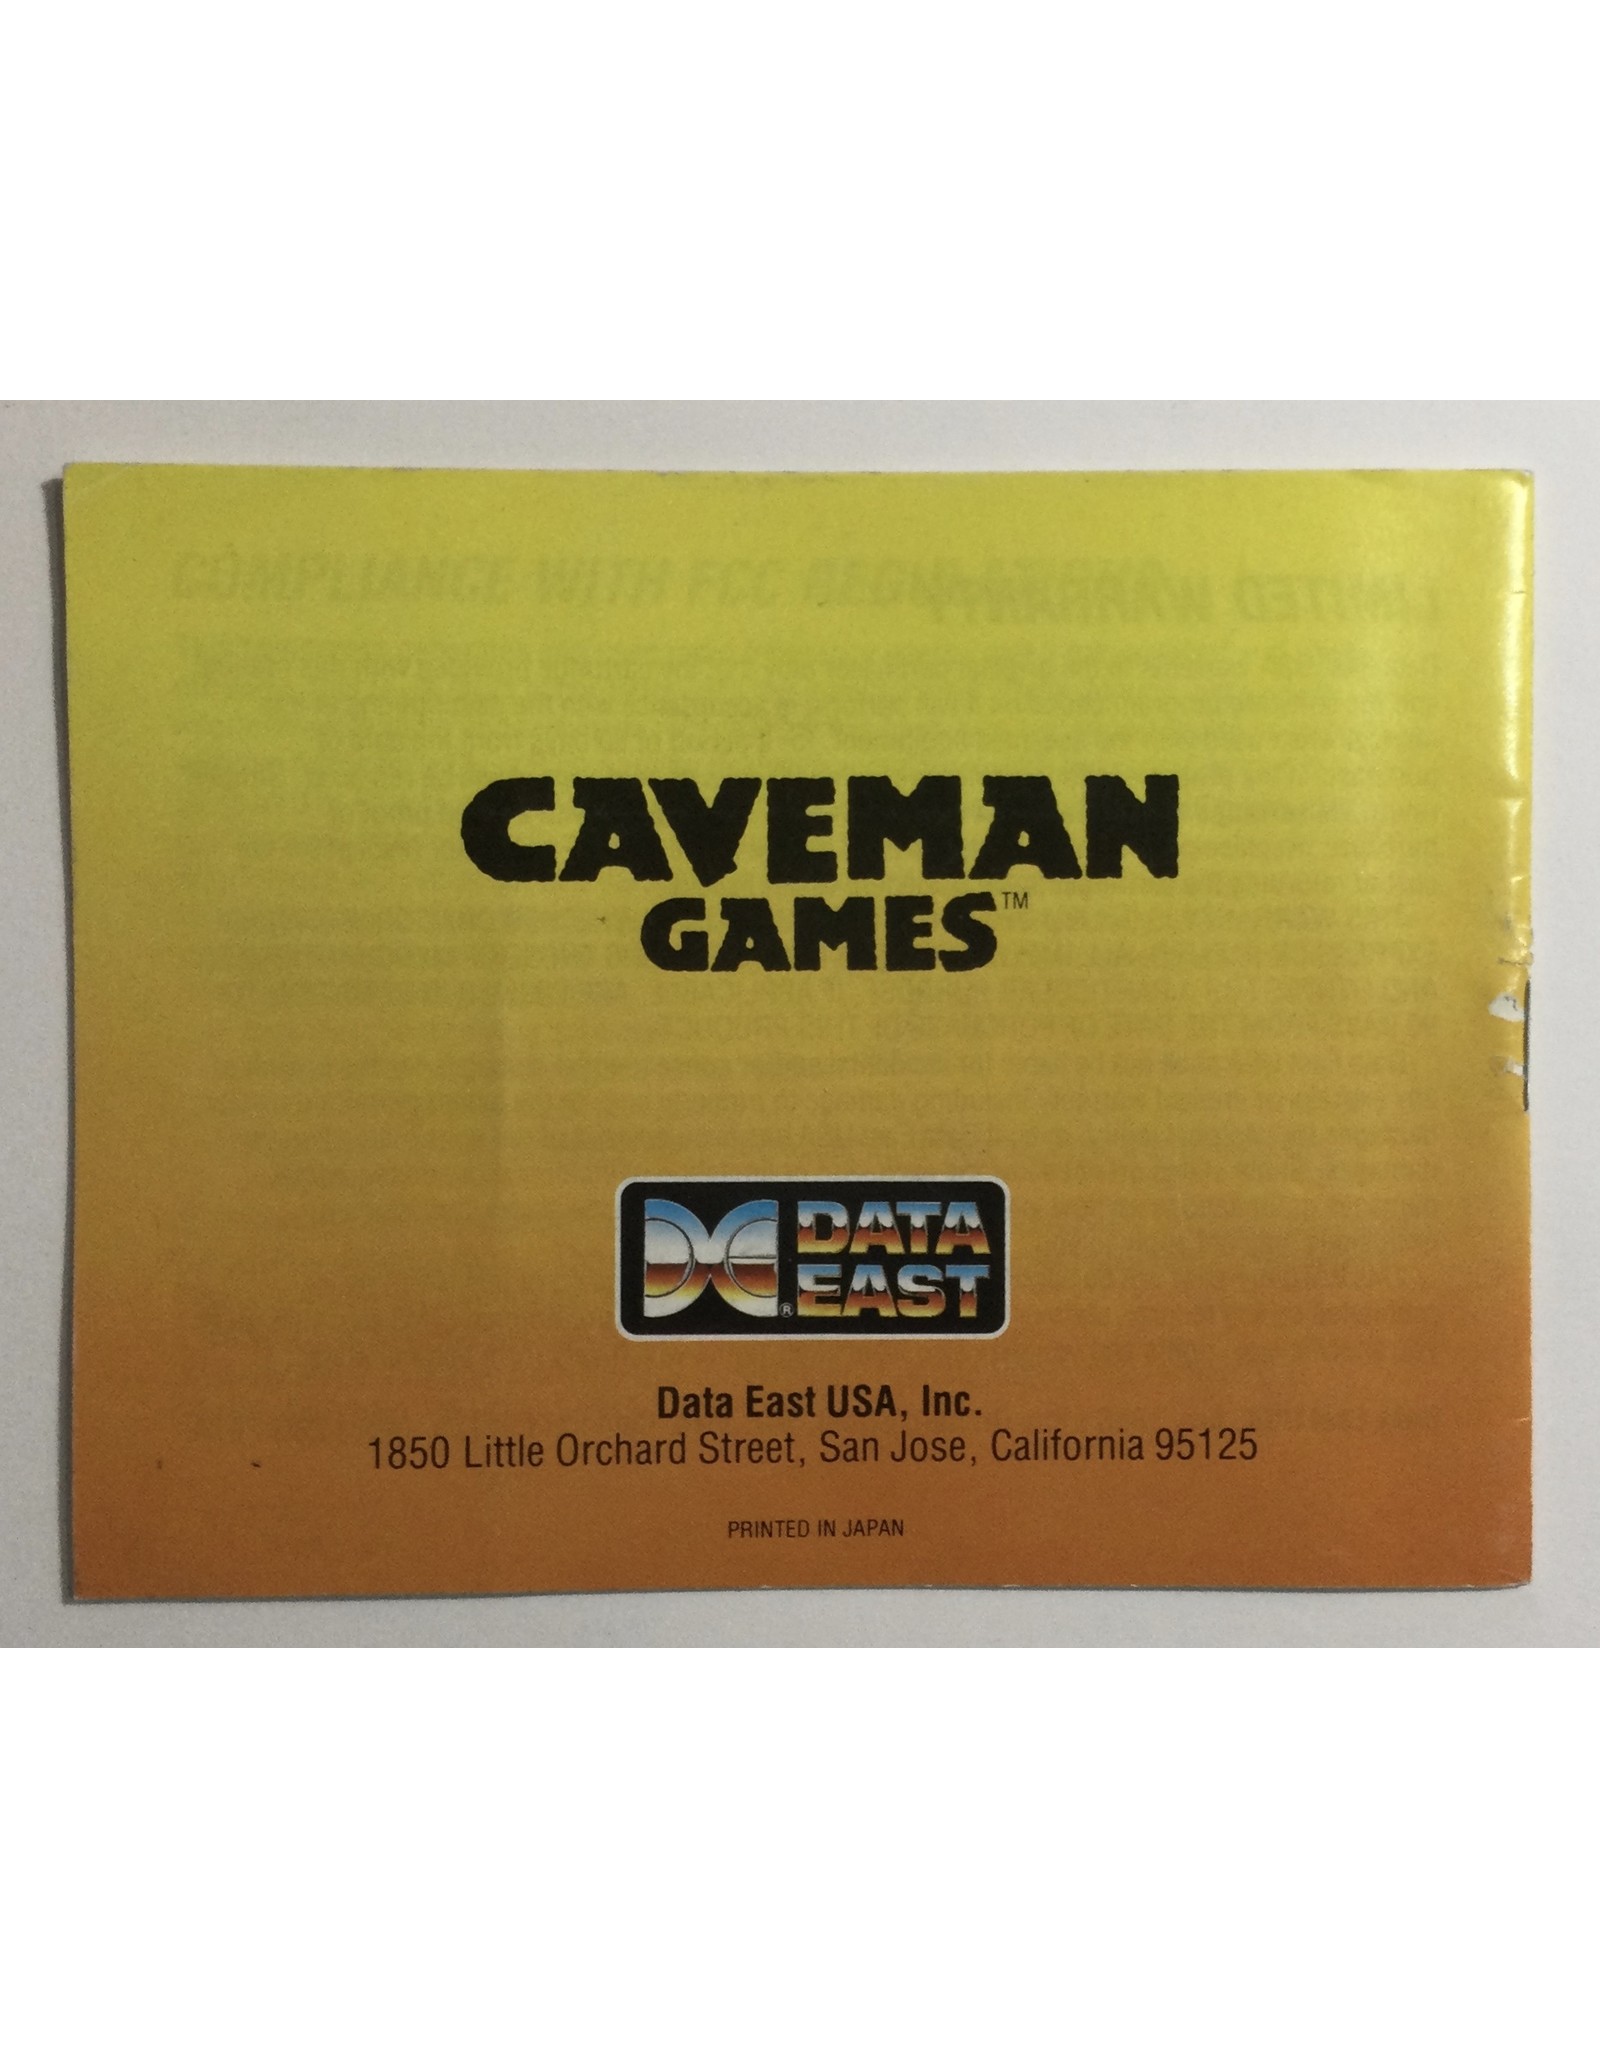 DATA EAST Caveman Games for Nintendo Entertainment system (NES) - CIB